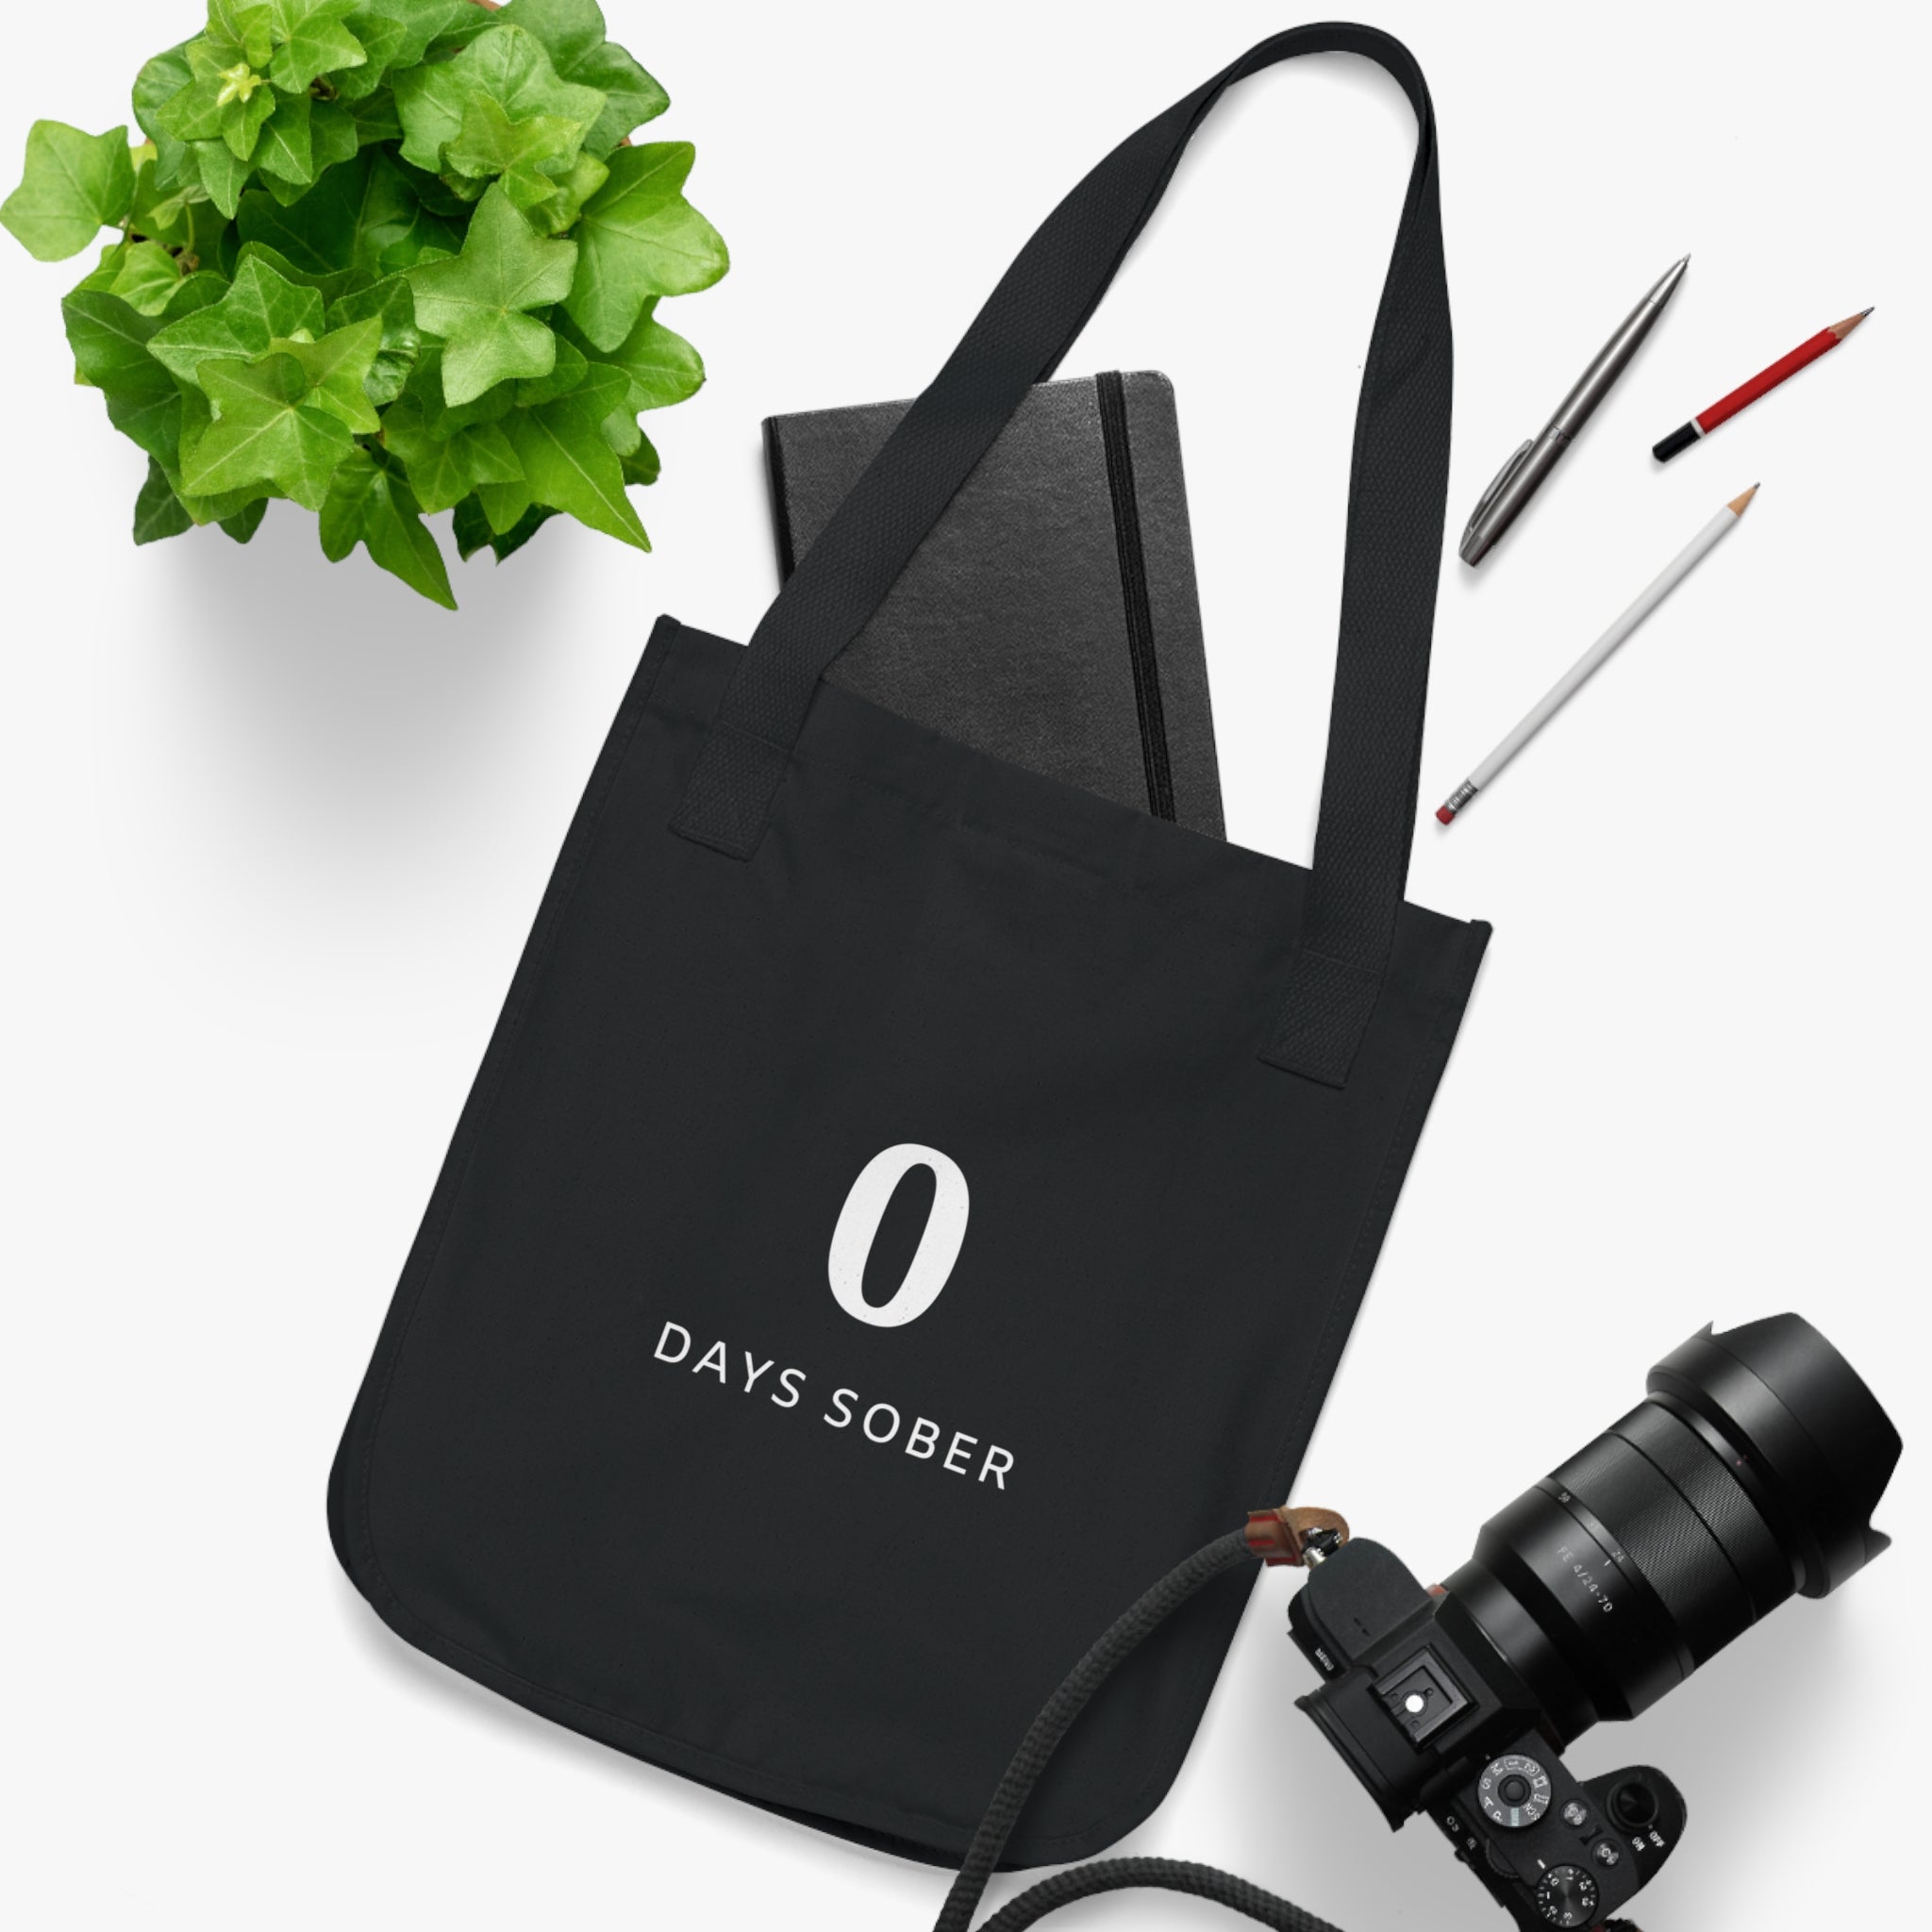 0 Days Sober | Organic Canvas Tote Bag